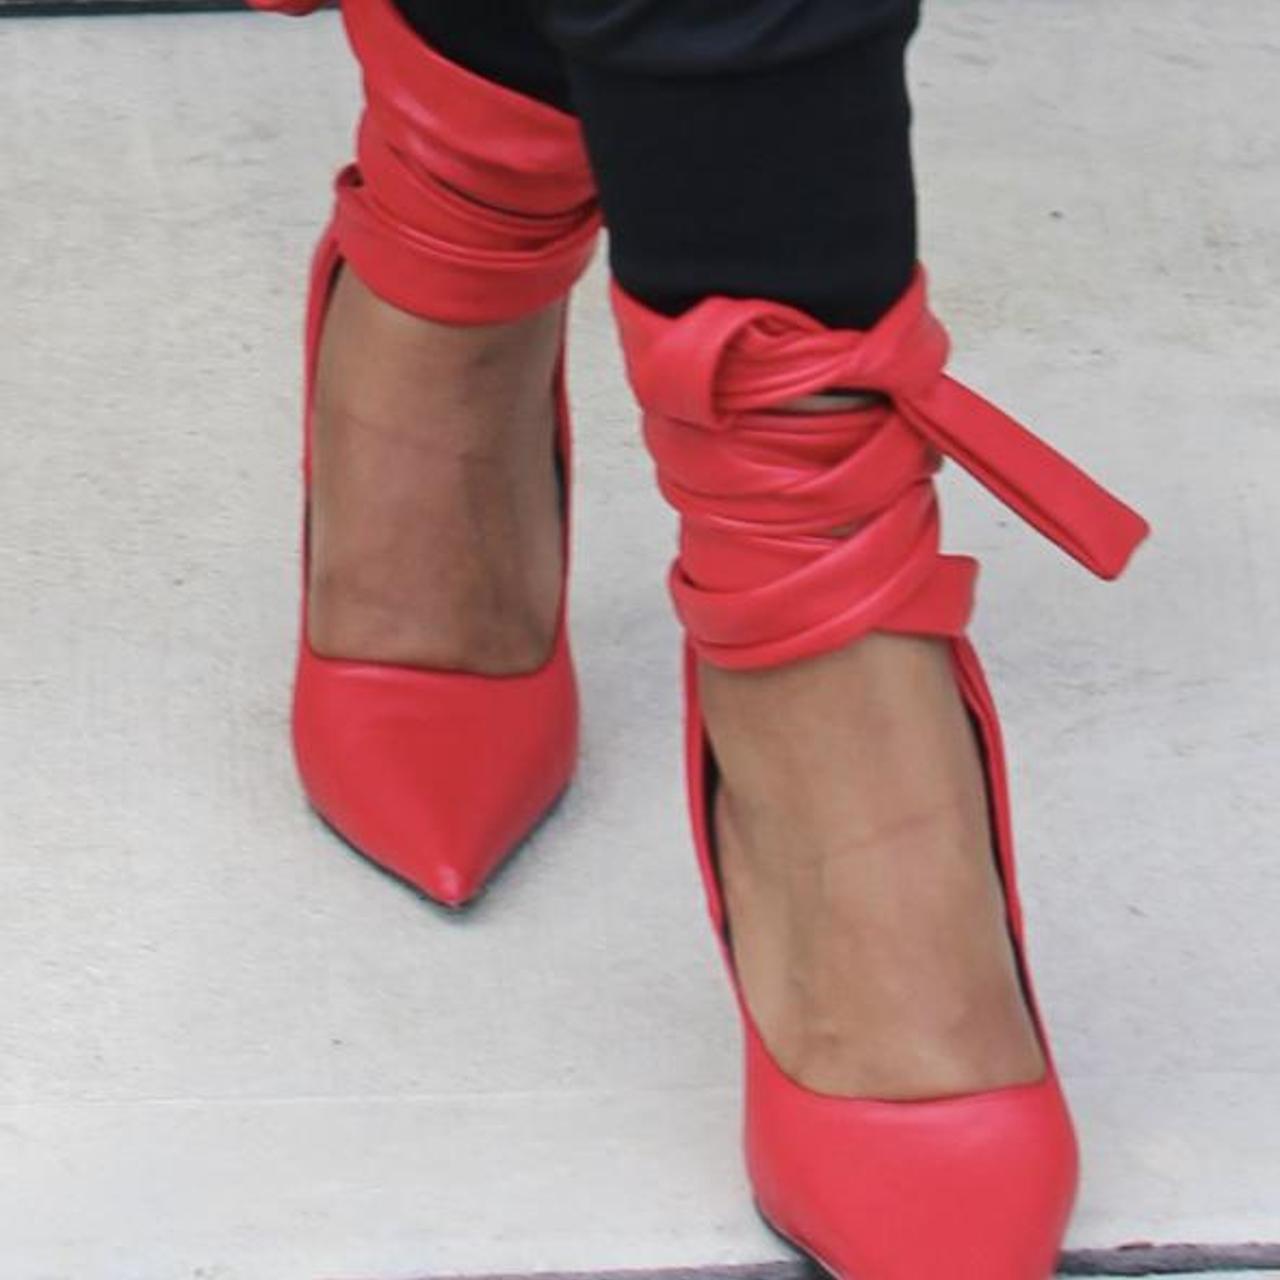 Product Image 2 - Wrap faux leather heel
Looks like